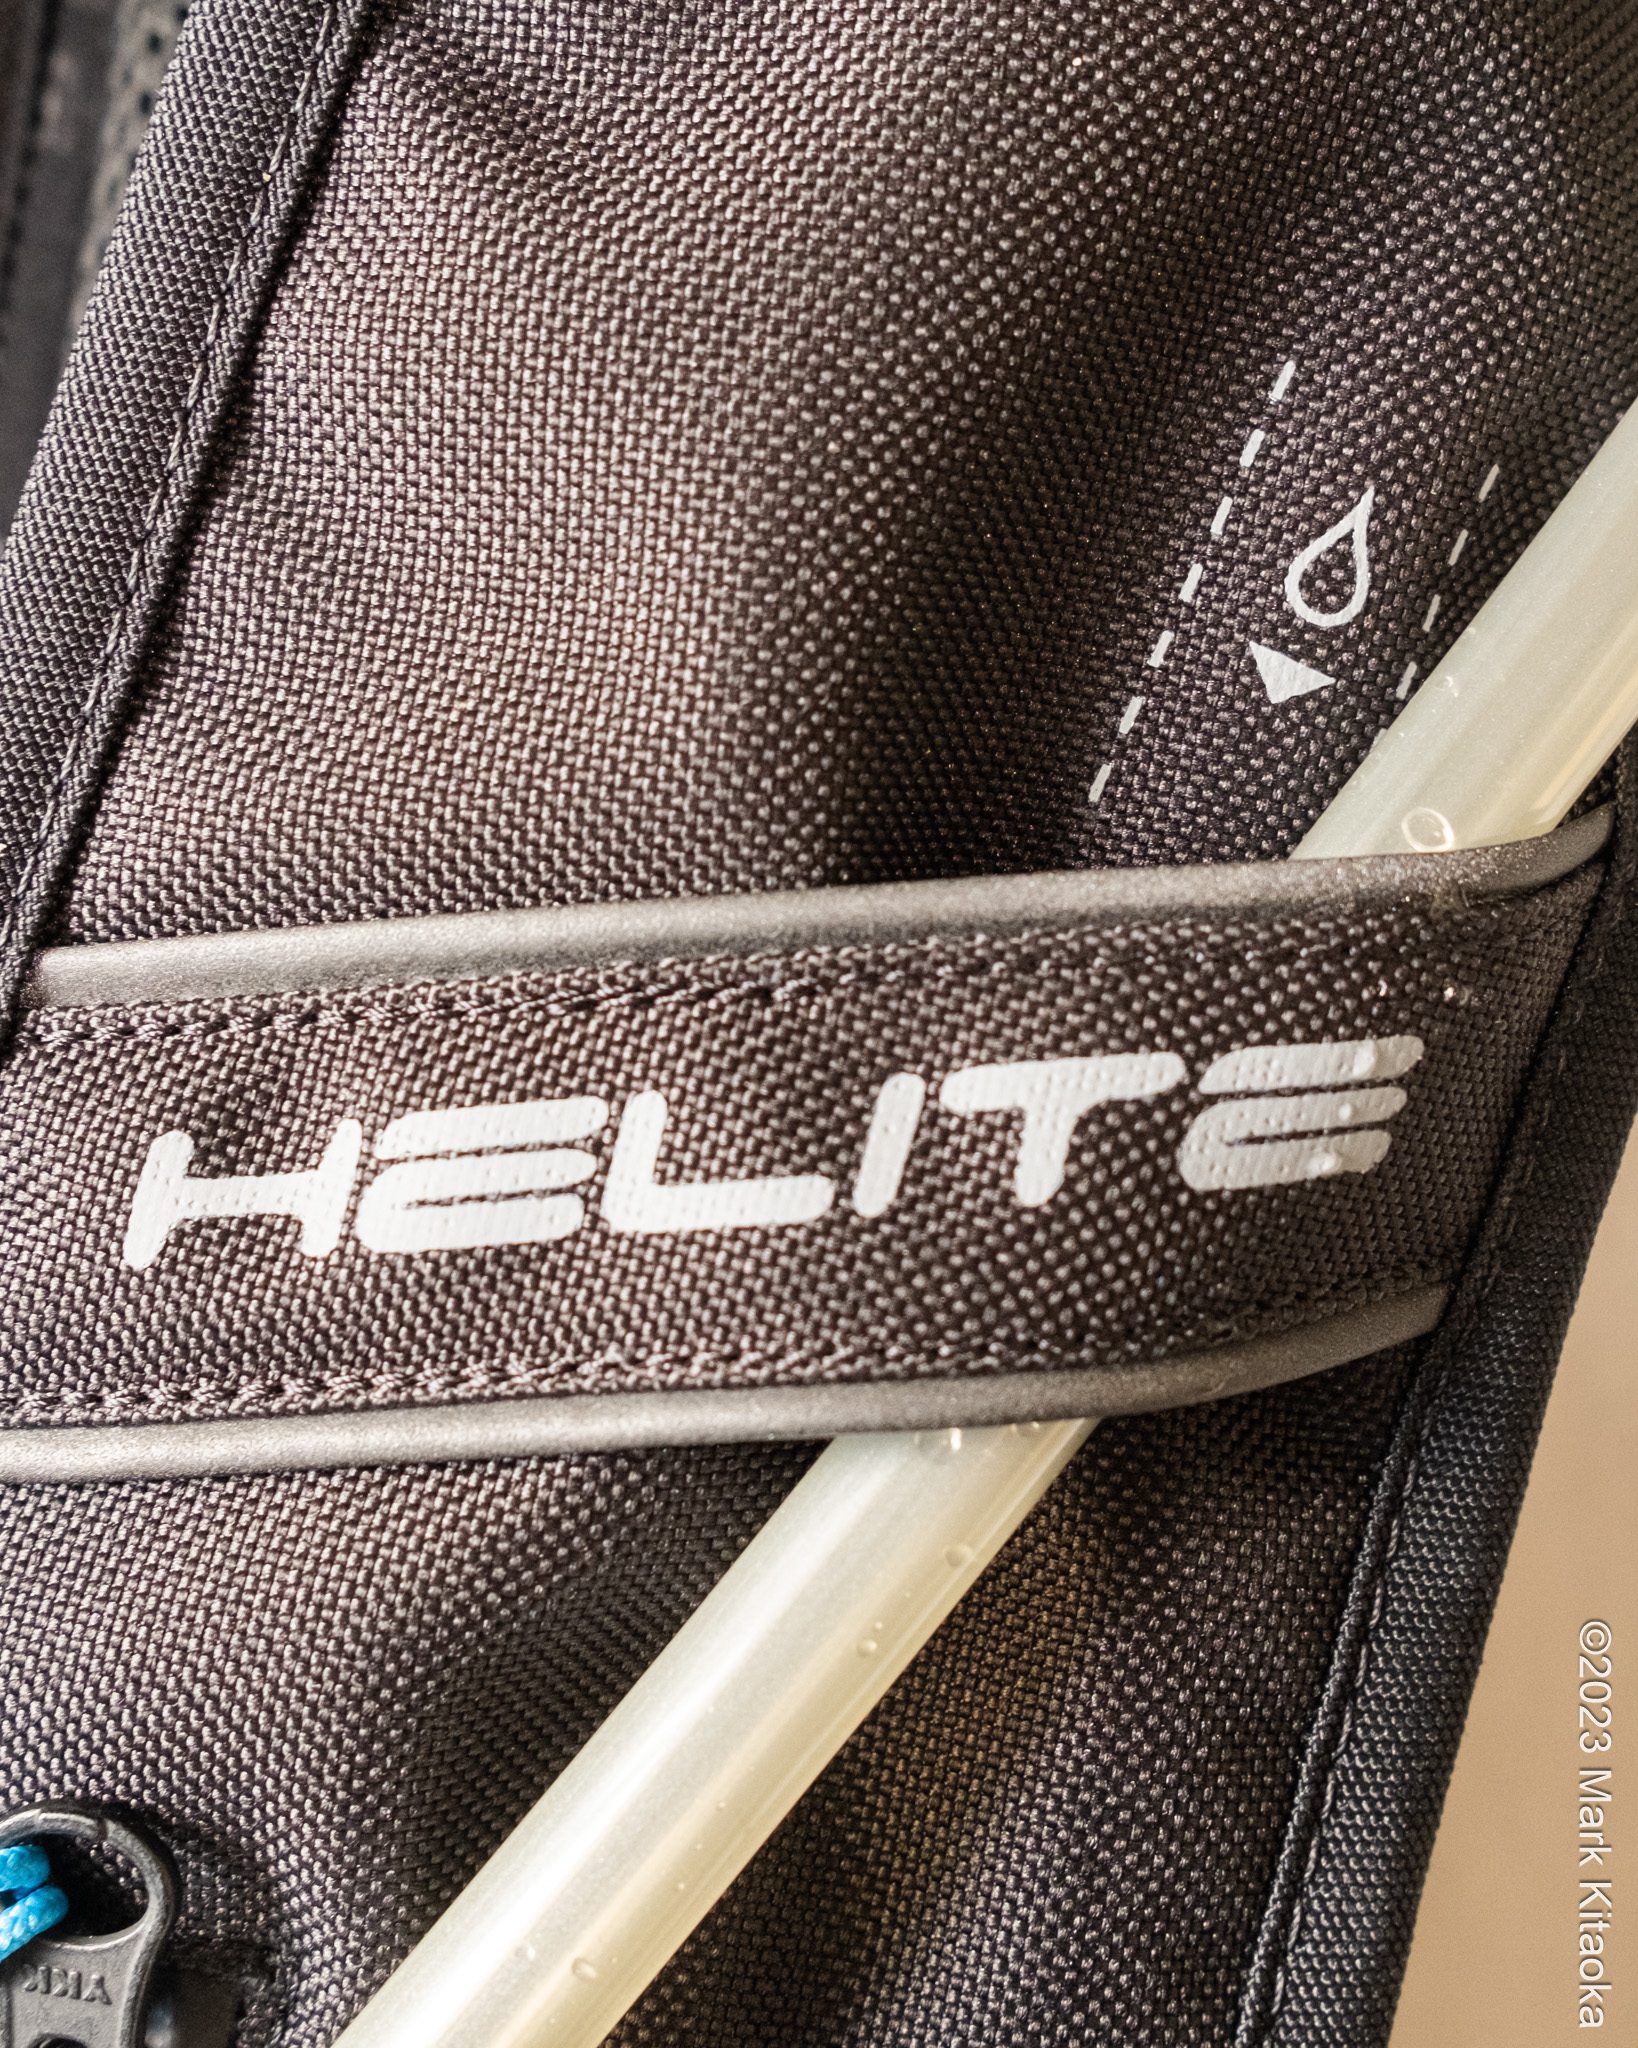 Closeup of Helite branding